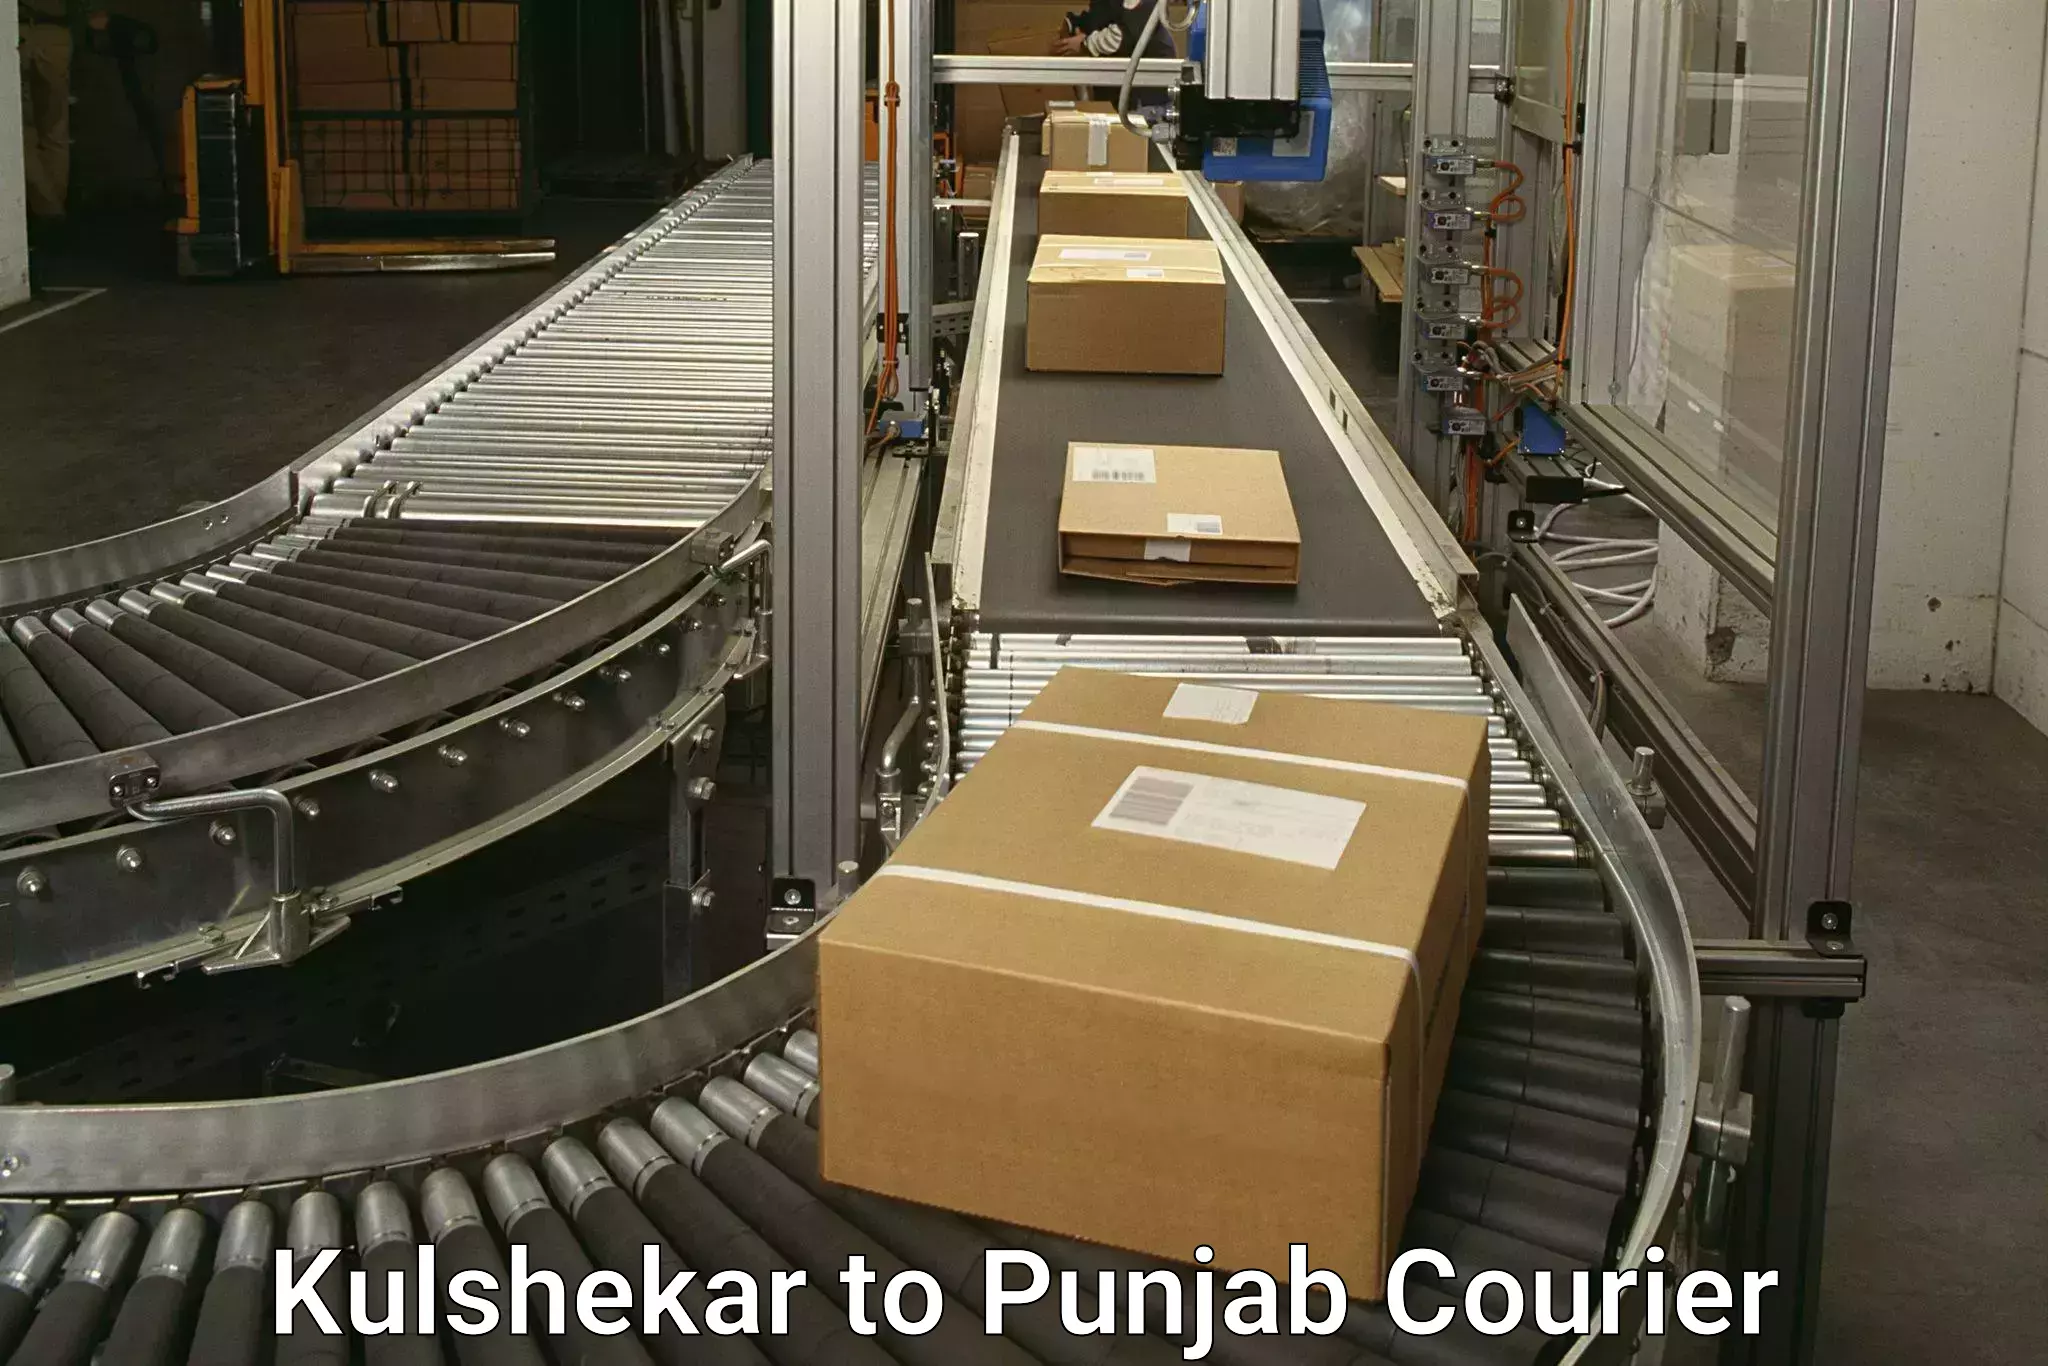 24/7 courier service Kulshekar to Punjab